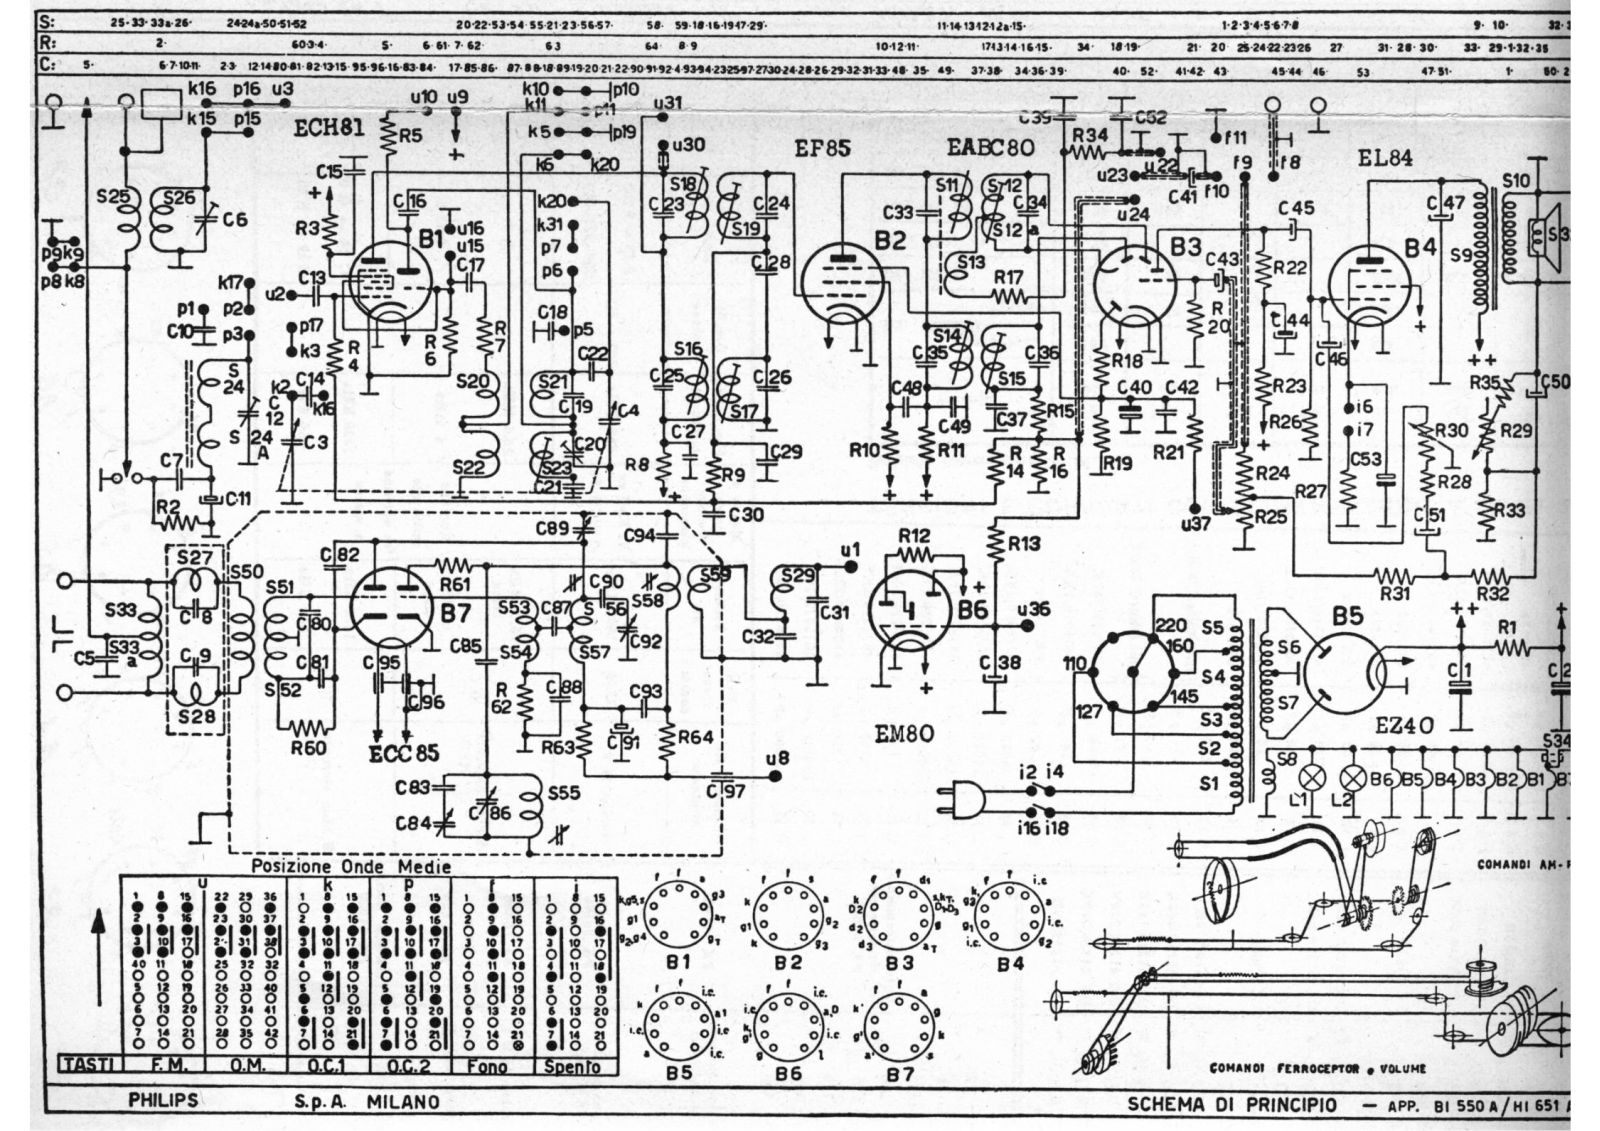 Philips 651a 2 schematic